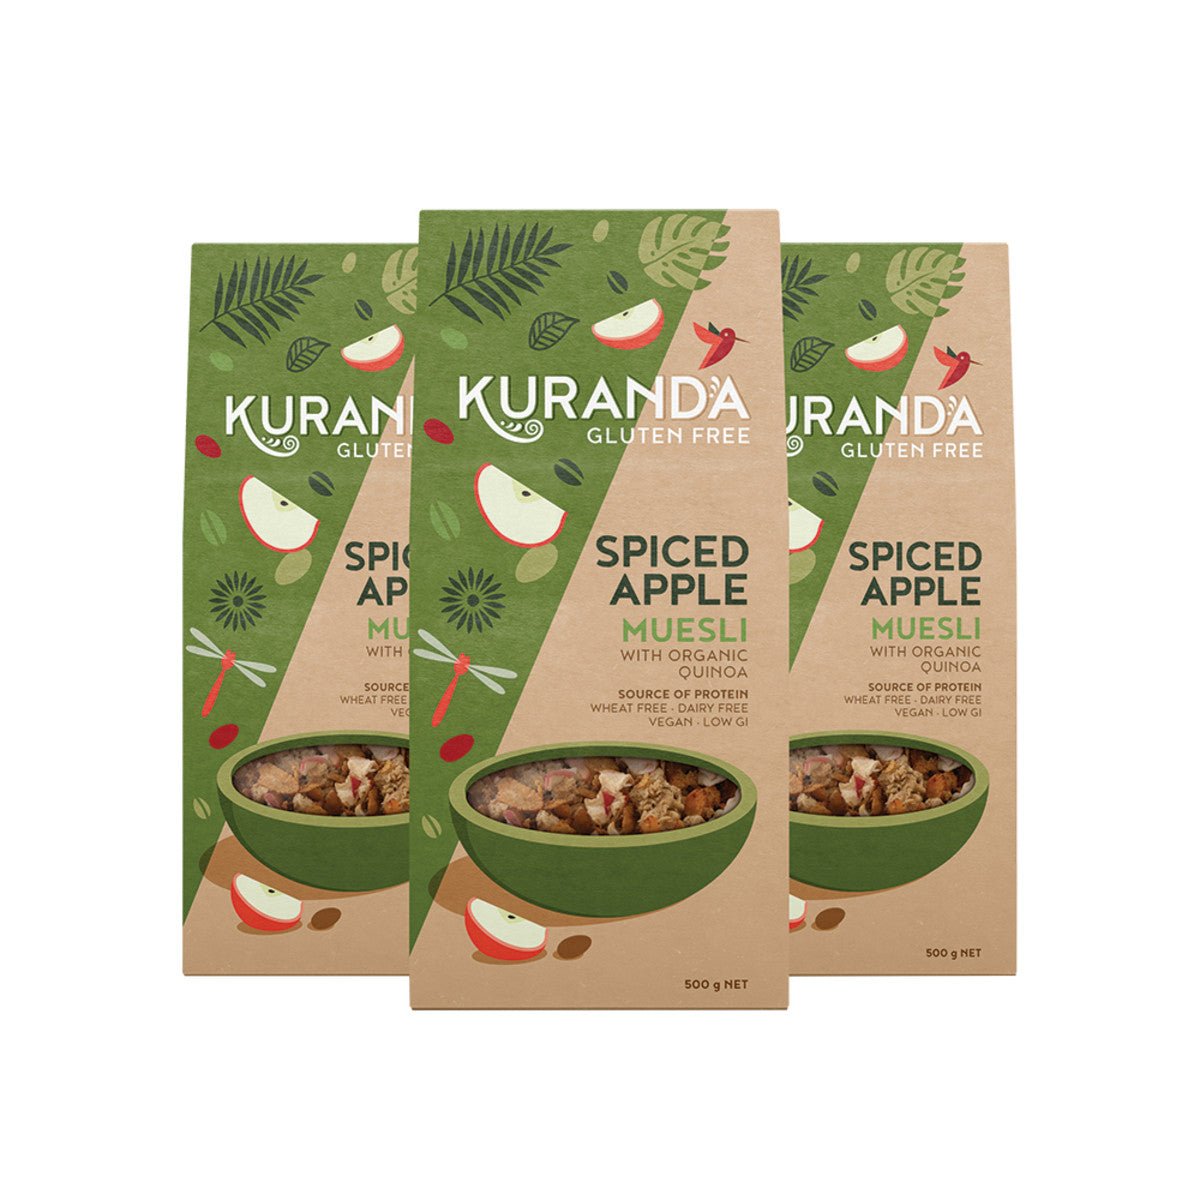 Kuranda - Gluten Free Muesli Spiced Apple